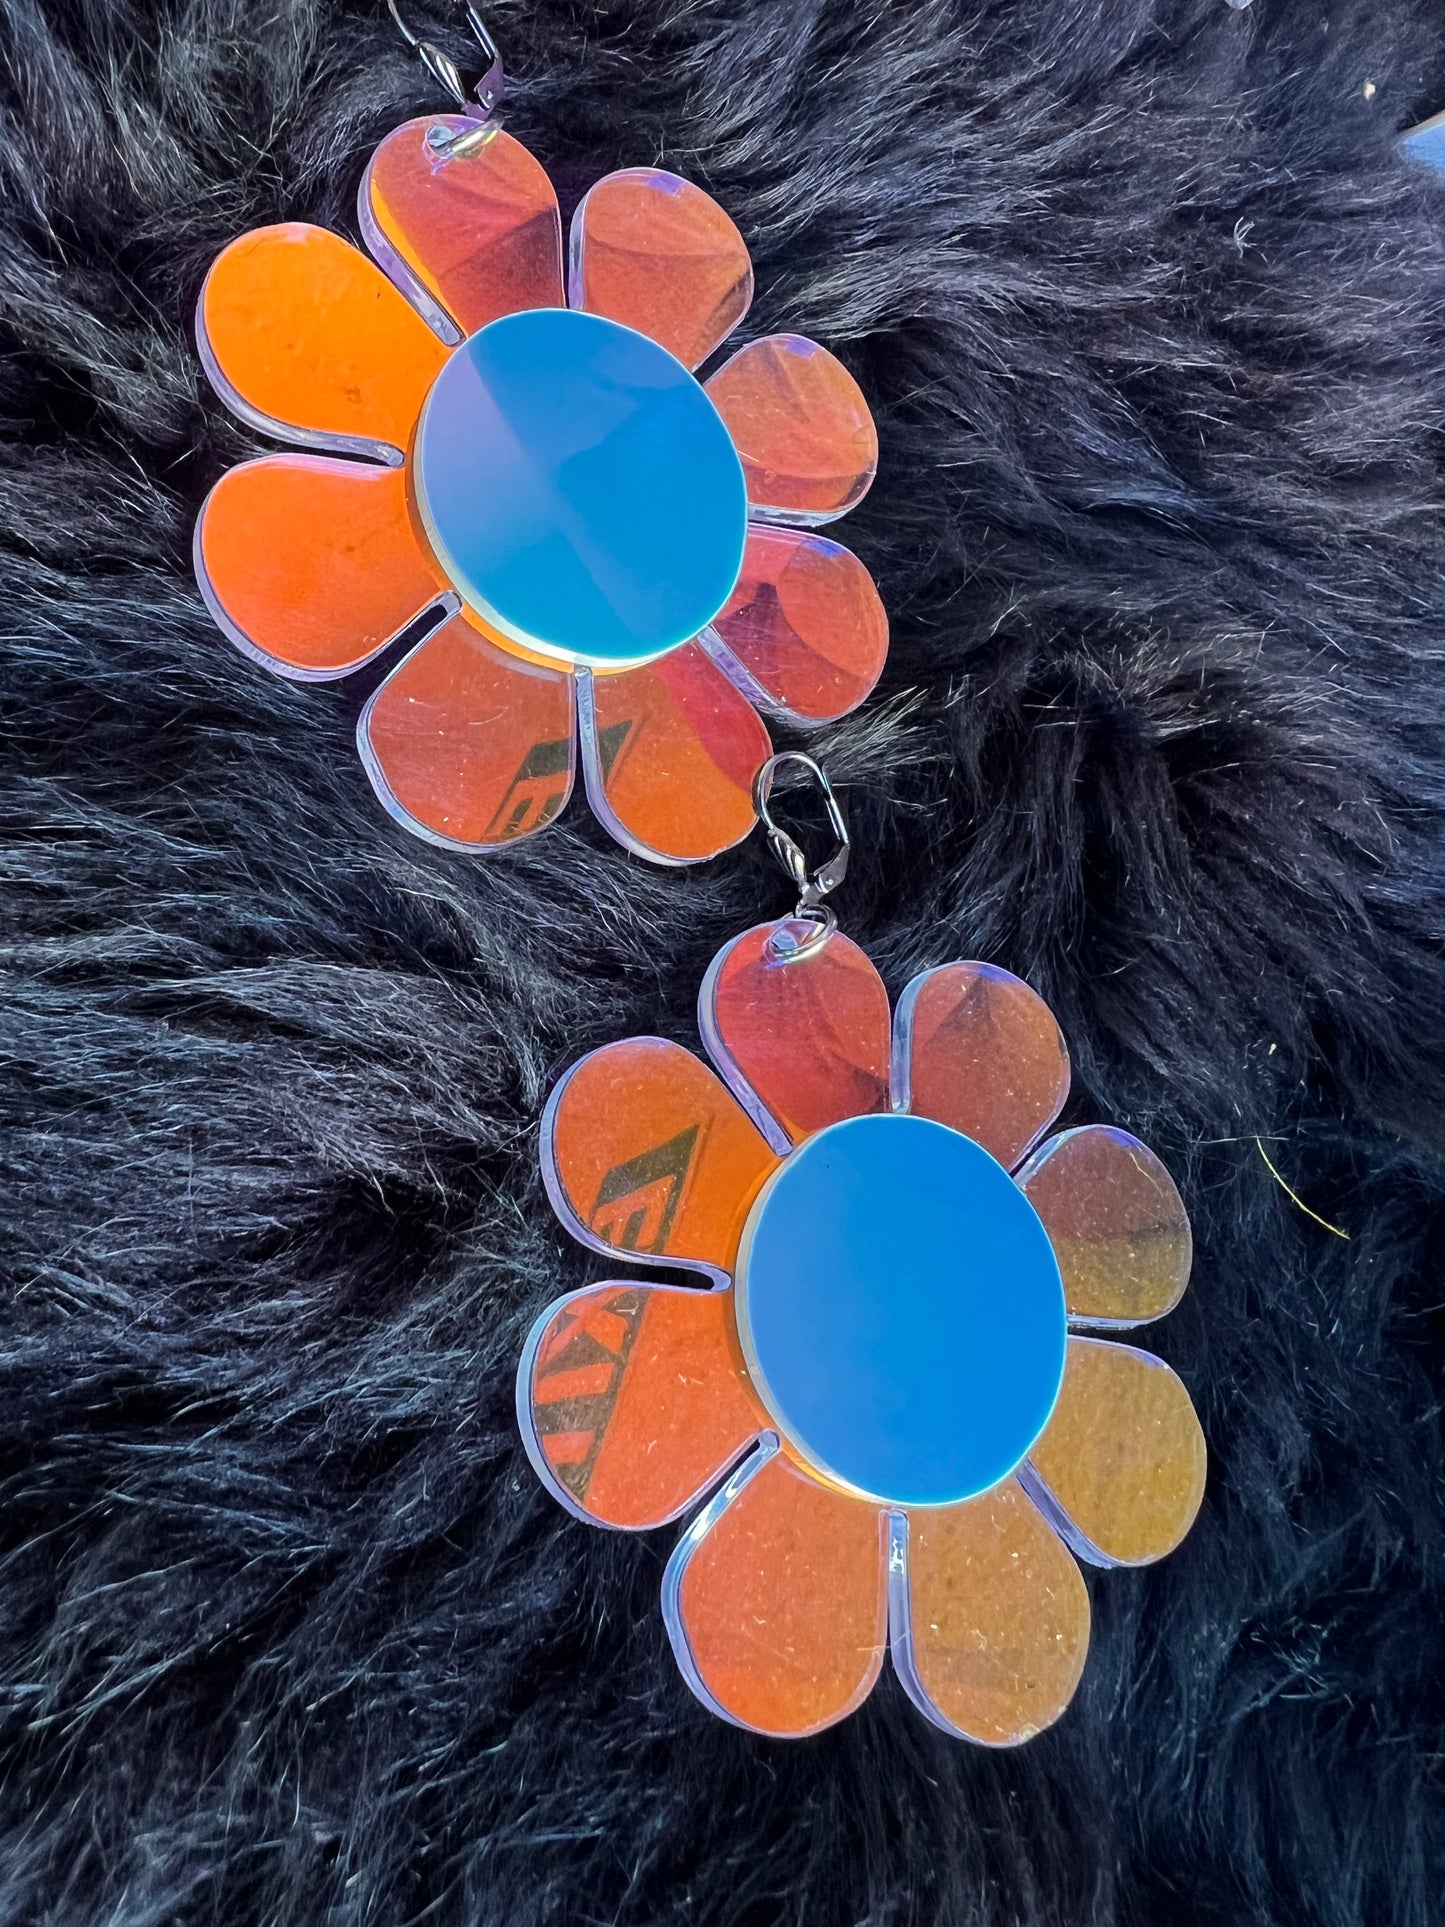 Holographic Flower Power Earrings